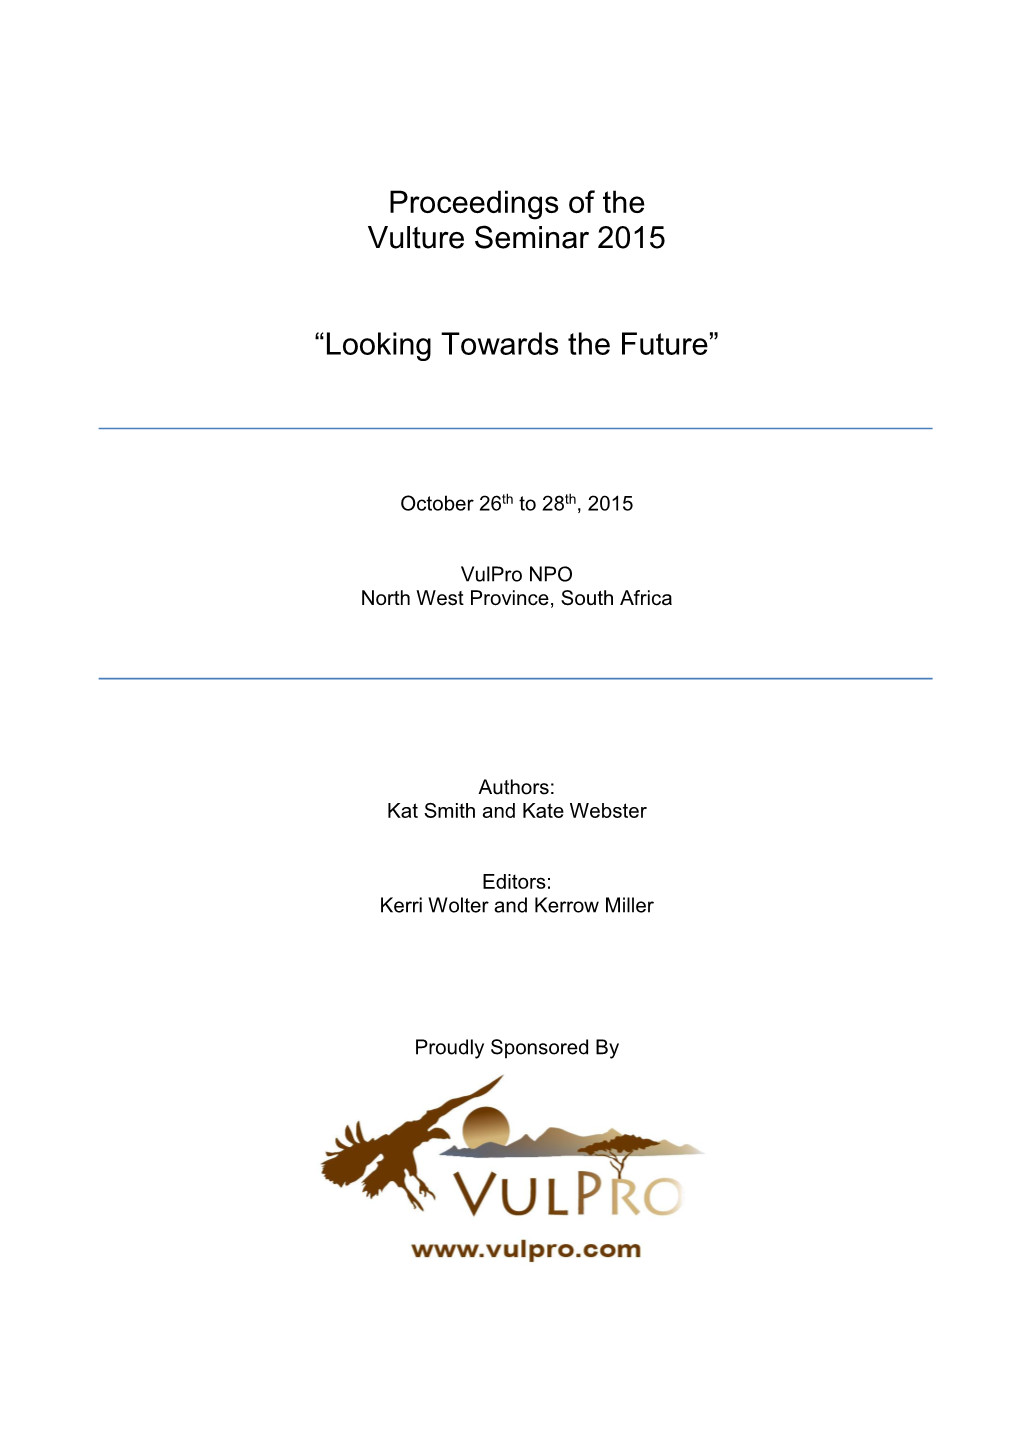 Proceedings of the Vulture Seminar 2015